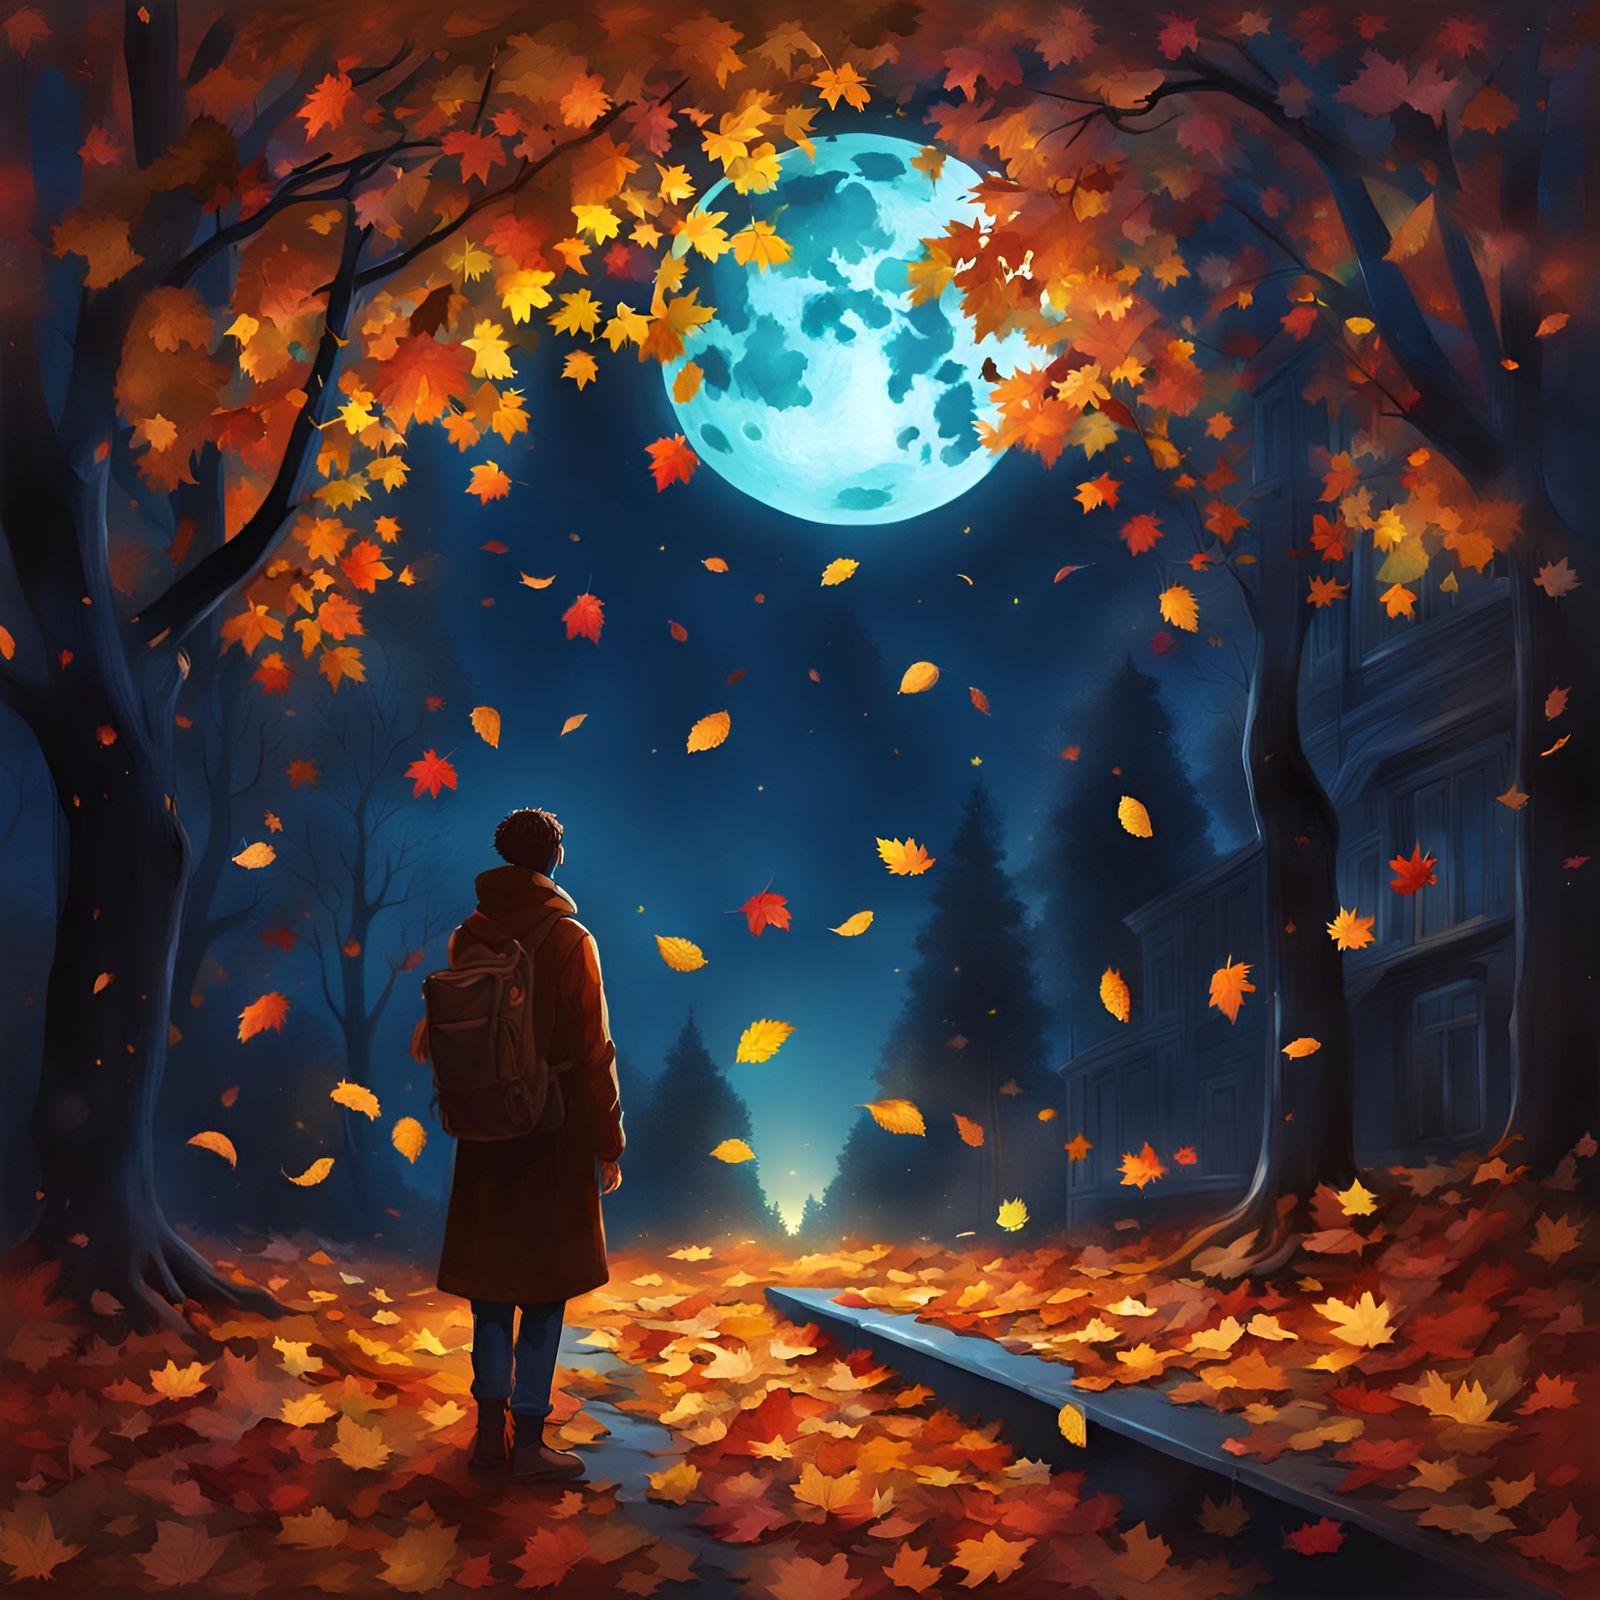 Moonlit Autumn stroll